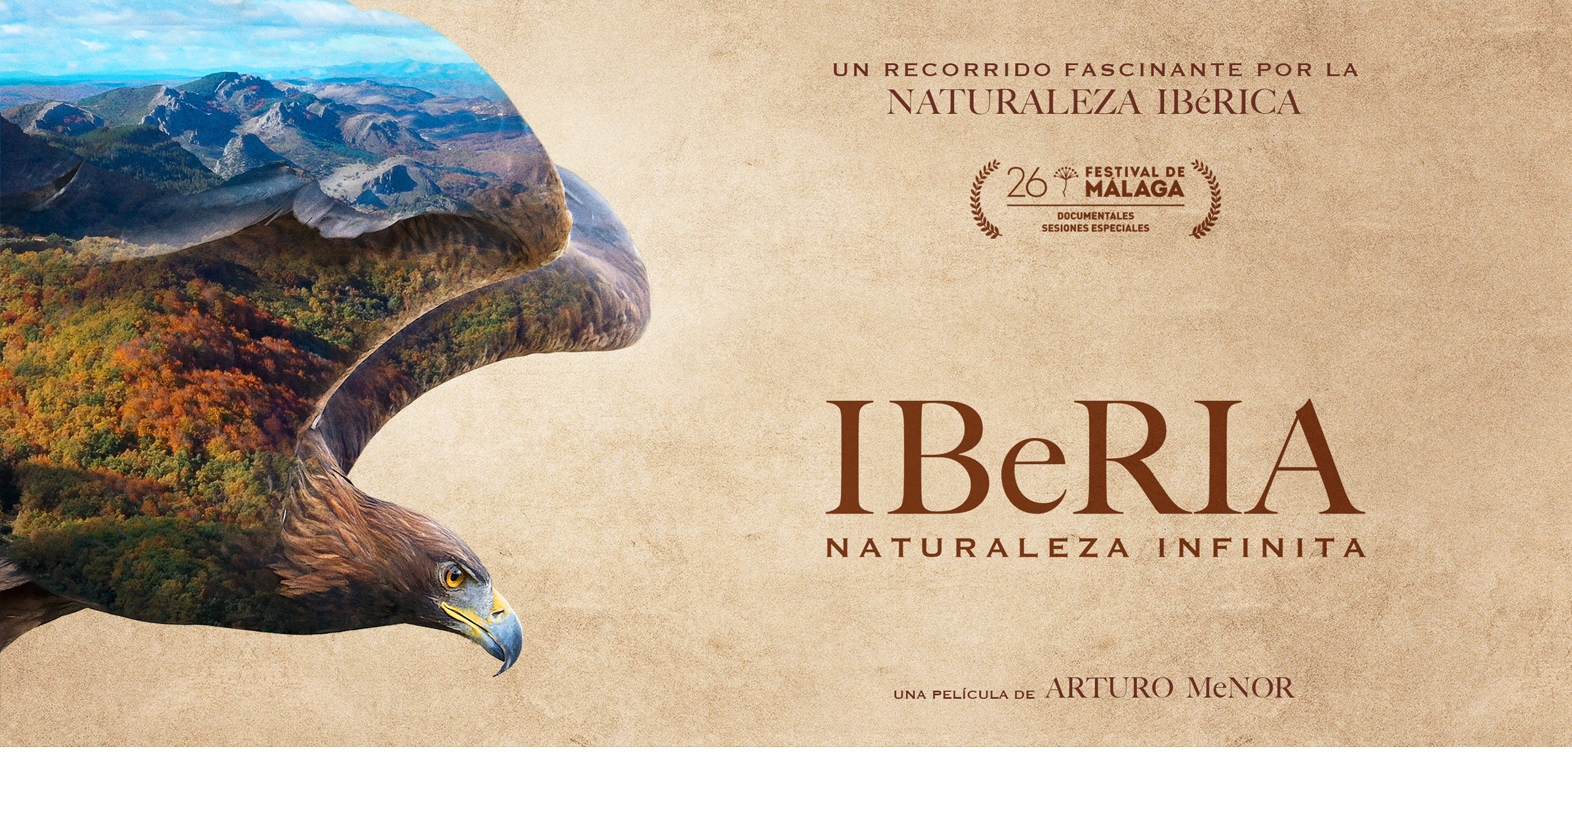 Pedro Cabañas - Design - IBERIA, naturaleza infinita